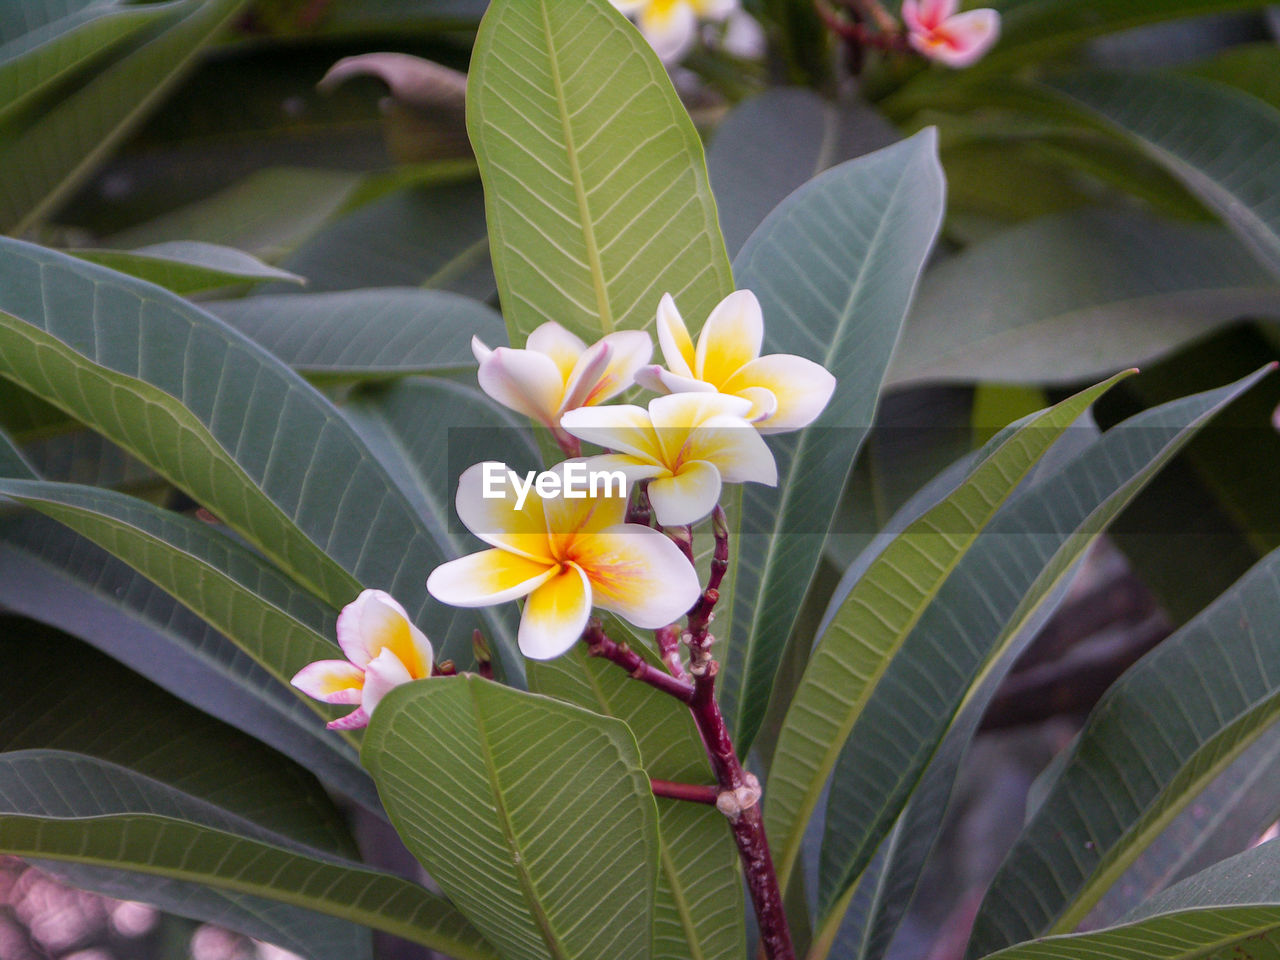 Close-up of frangipani flowers on leaves